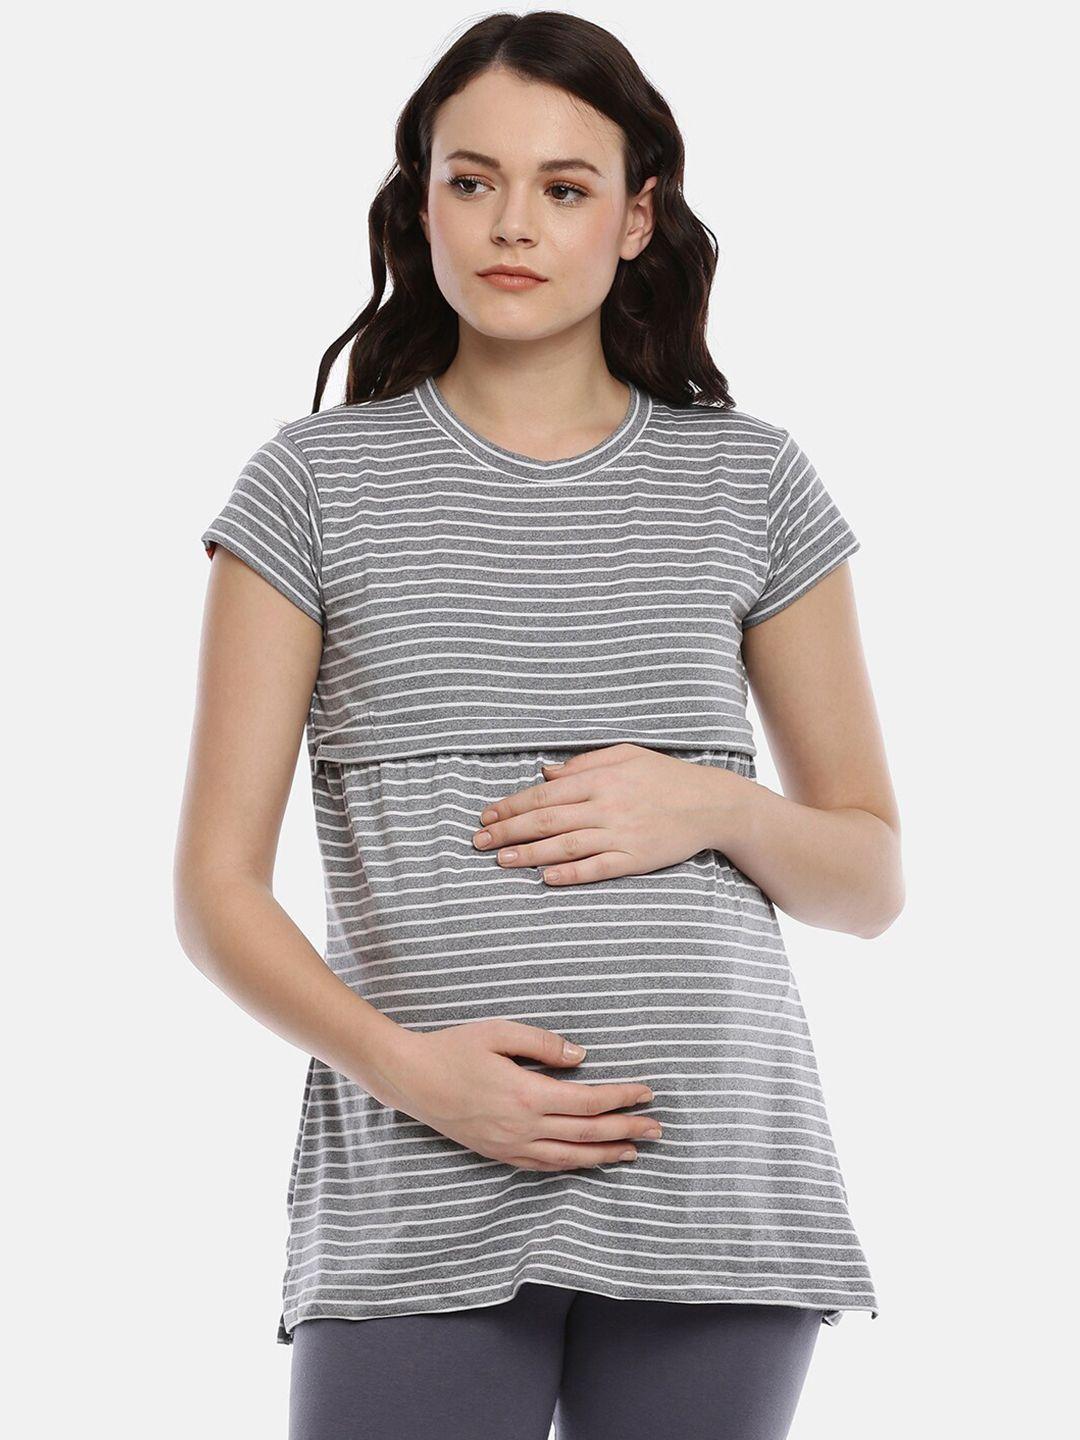 goldstroms striped maternity longline top